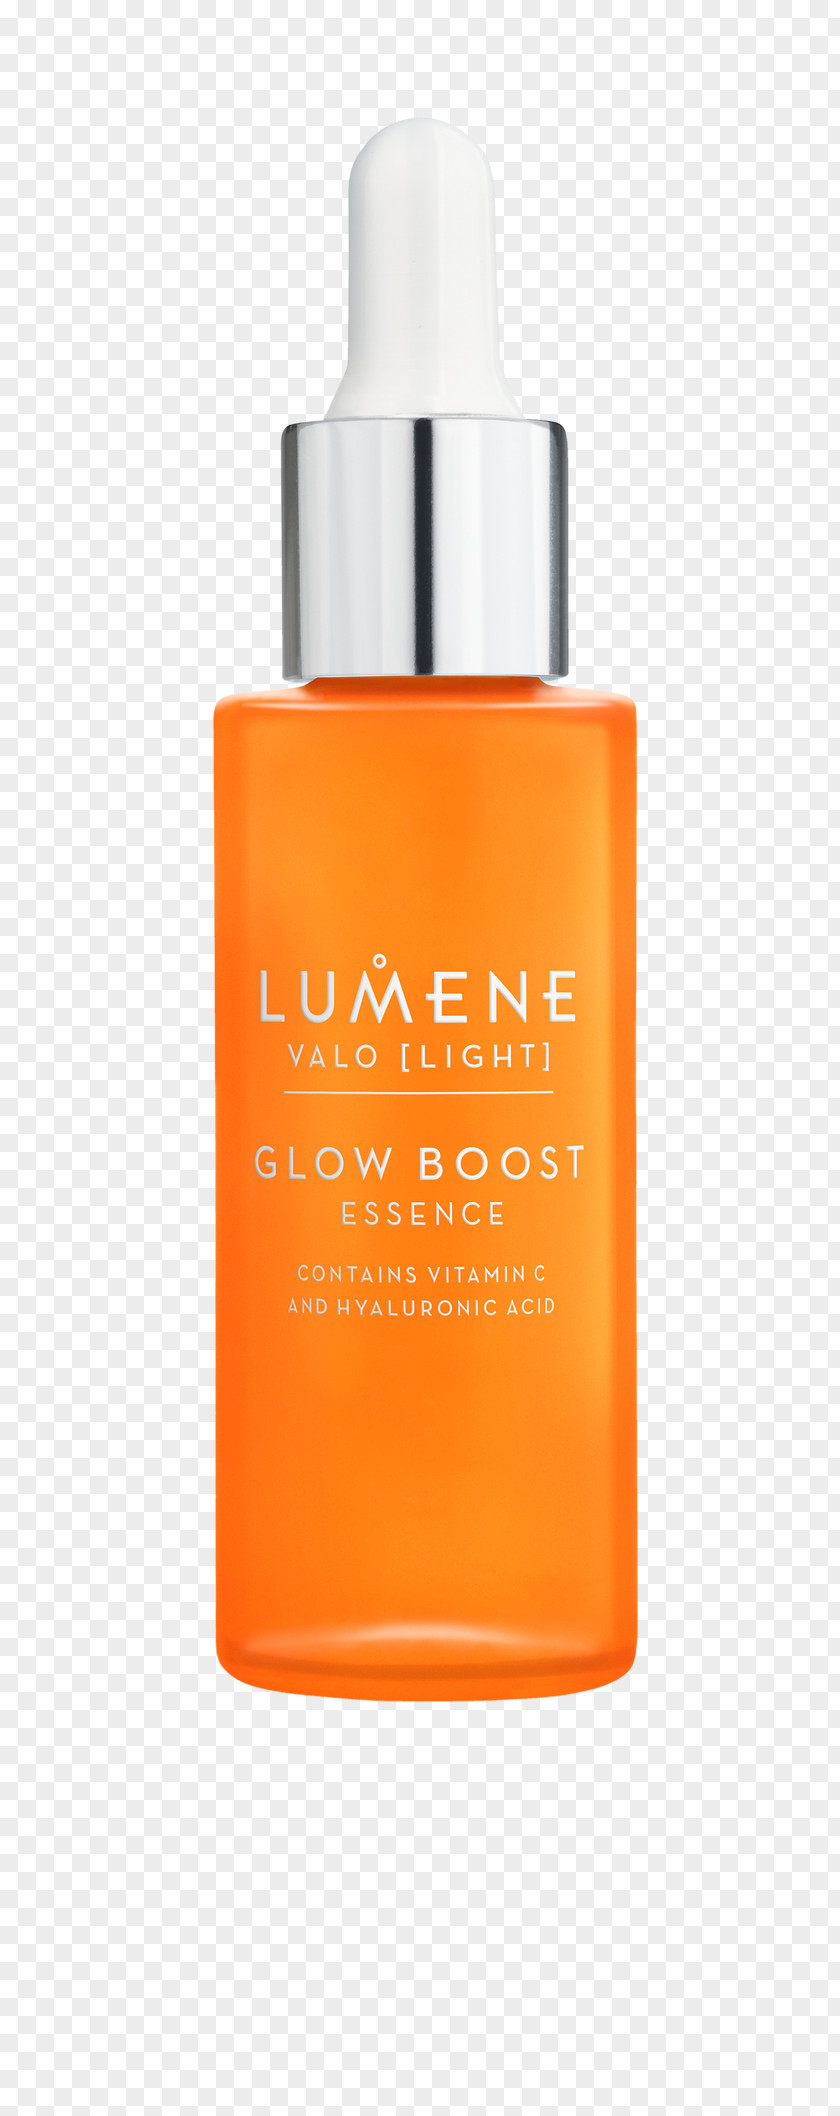 Ginseng Essence Lotion Lumene Valo Glow Boost Moisturizer Cream PNG